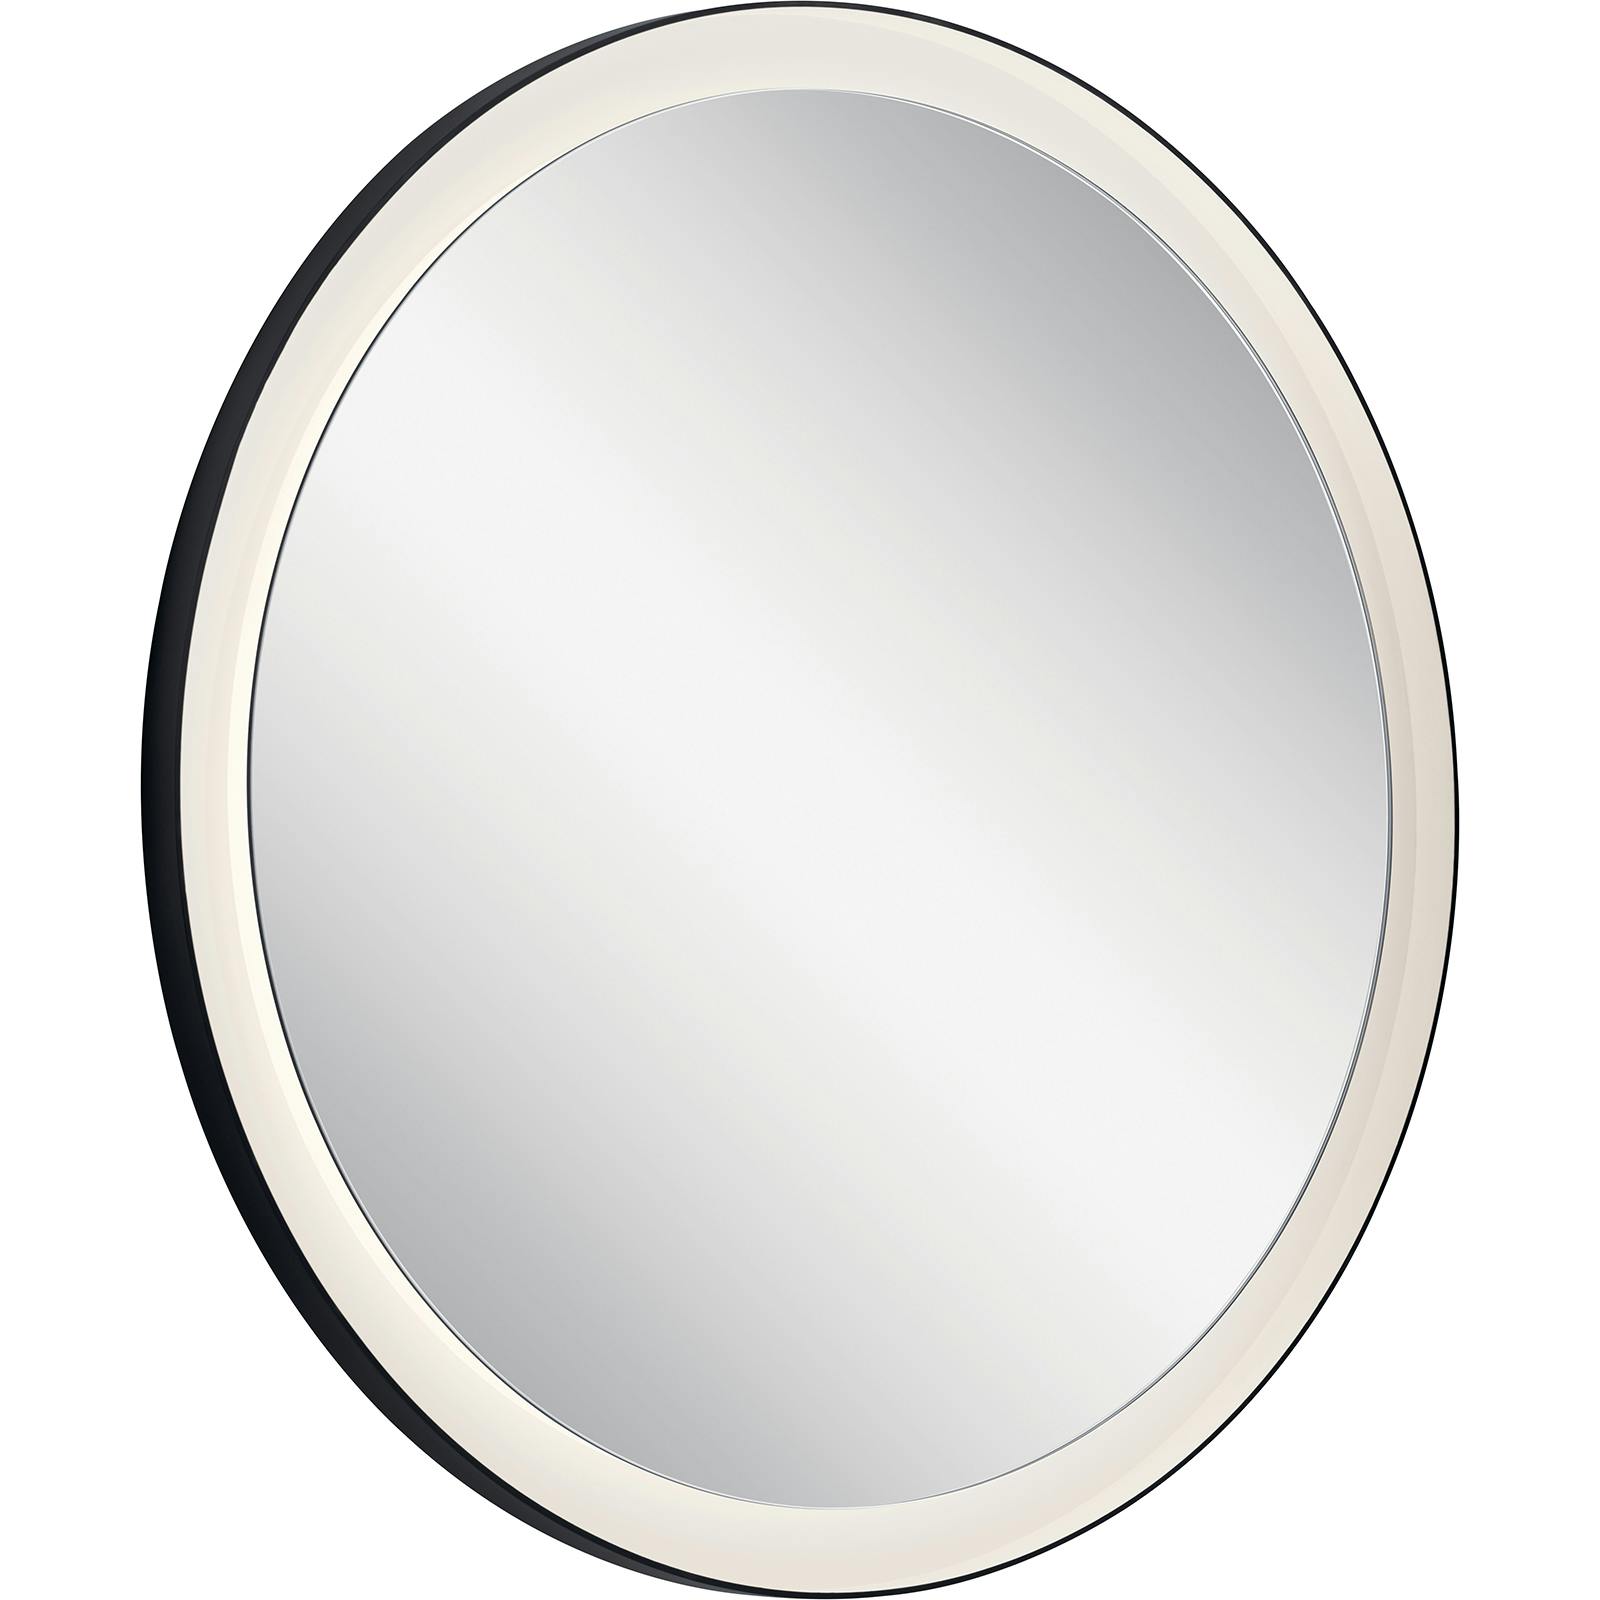 Ryame™ Round Lighted Mirror Black on a white background